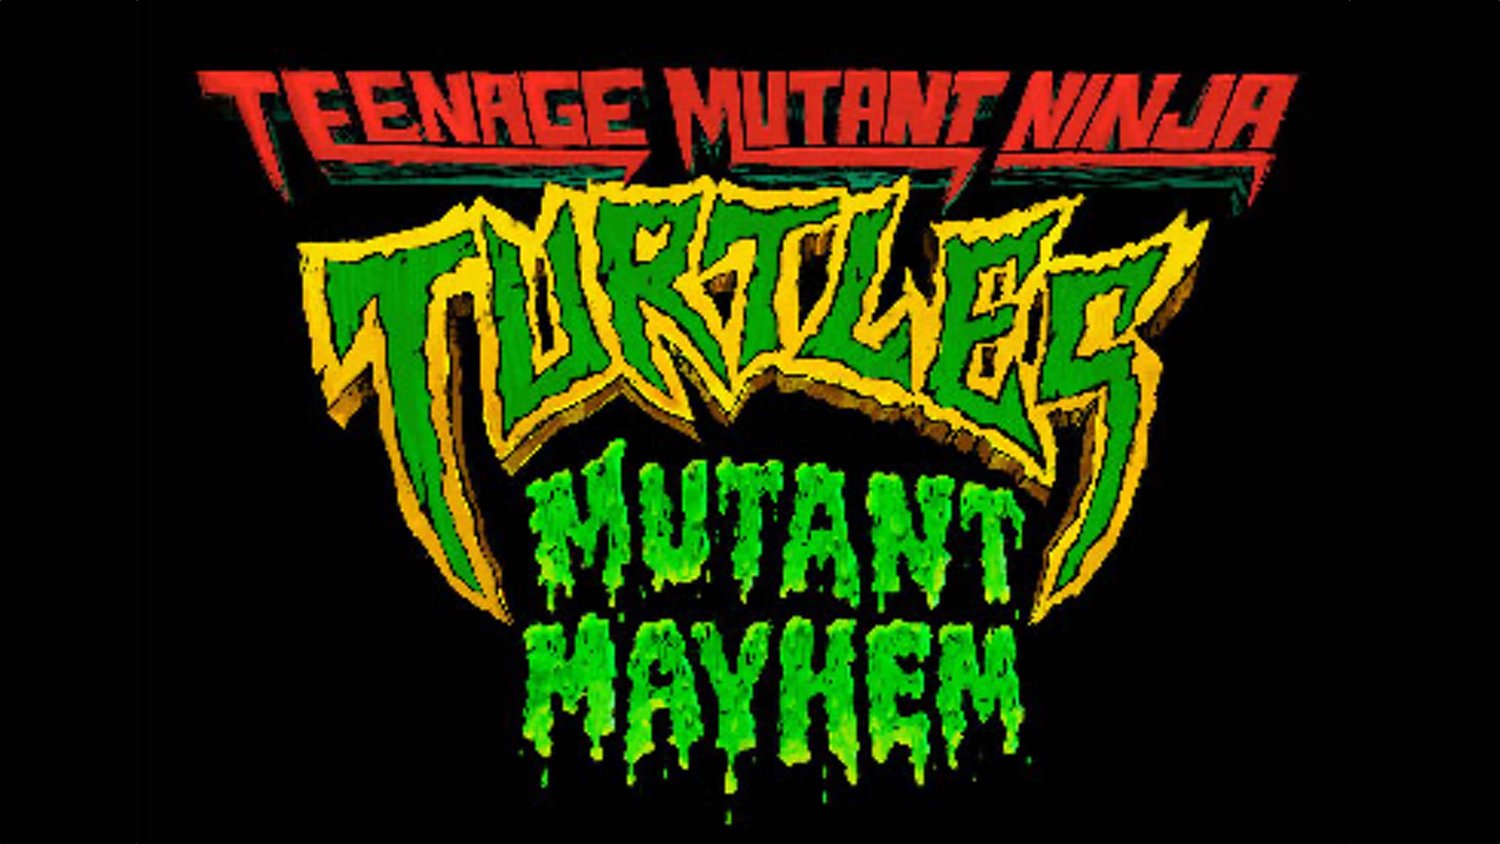 McFarlane Toys Announces Action Figures Based on The Upcoming TEENAGE MUTANT NINJA TURTLES Movie — GeekTyrant